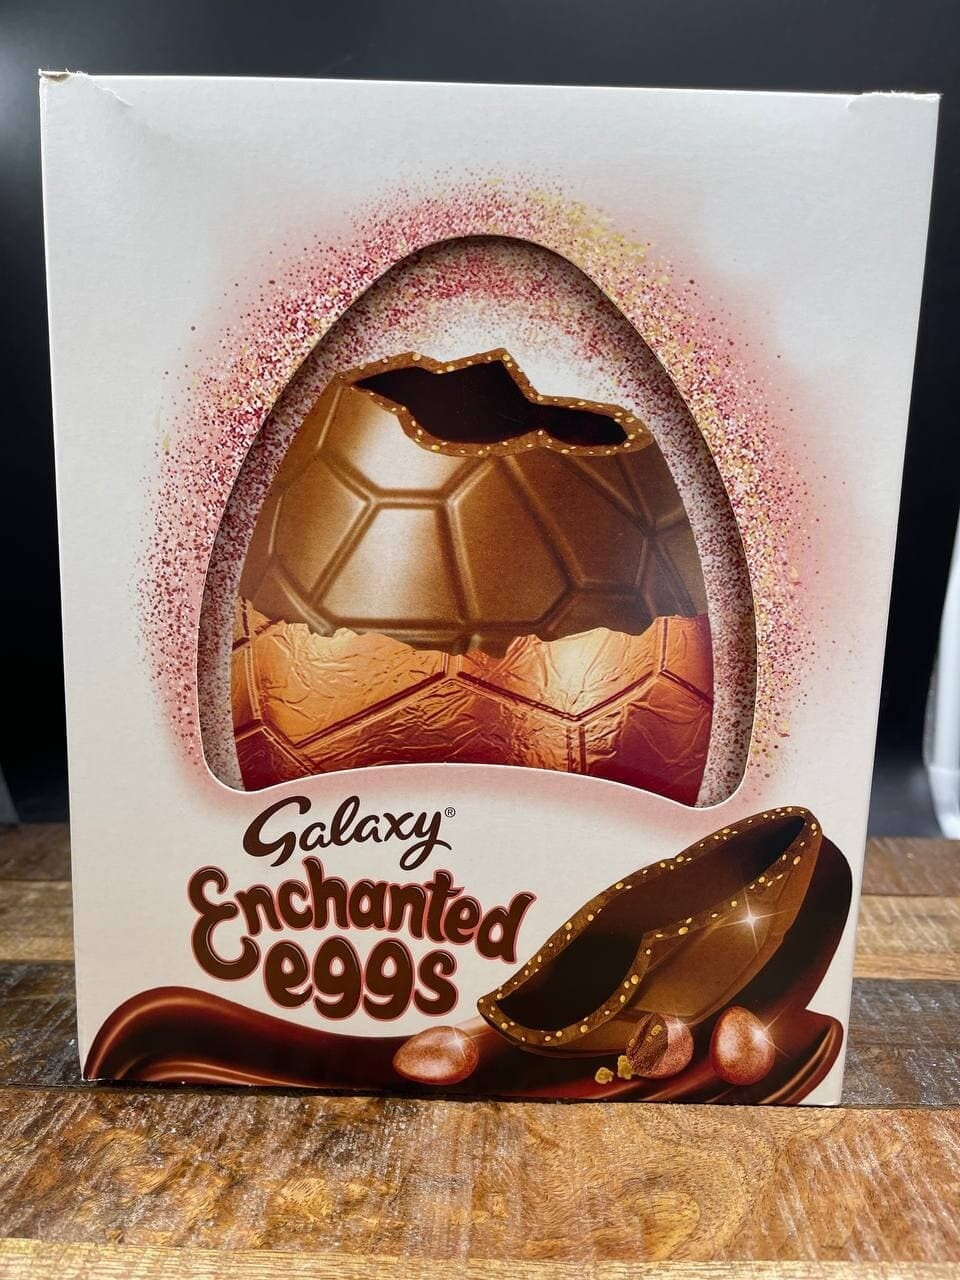 Galaxy Enchanted Eggs Easter Egg 528g